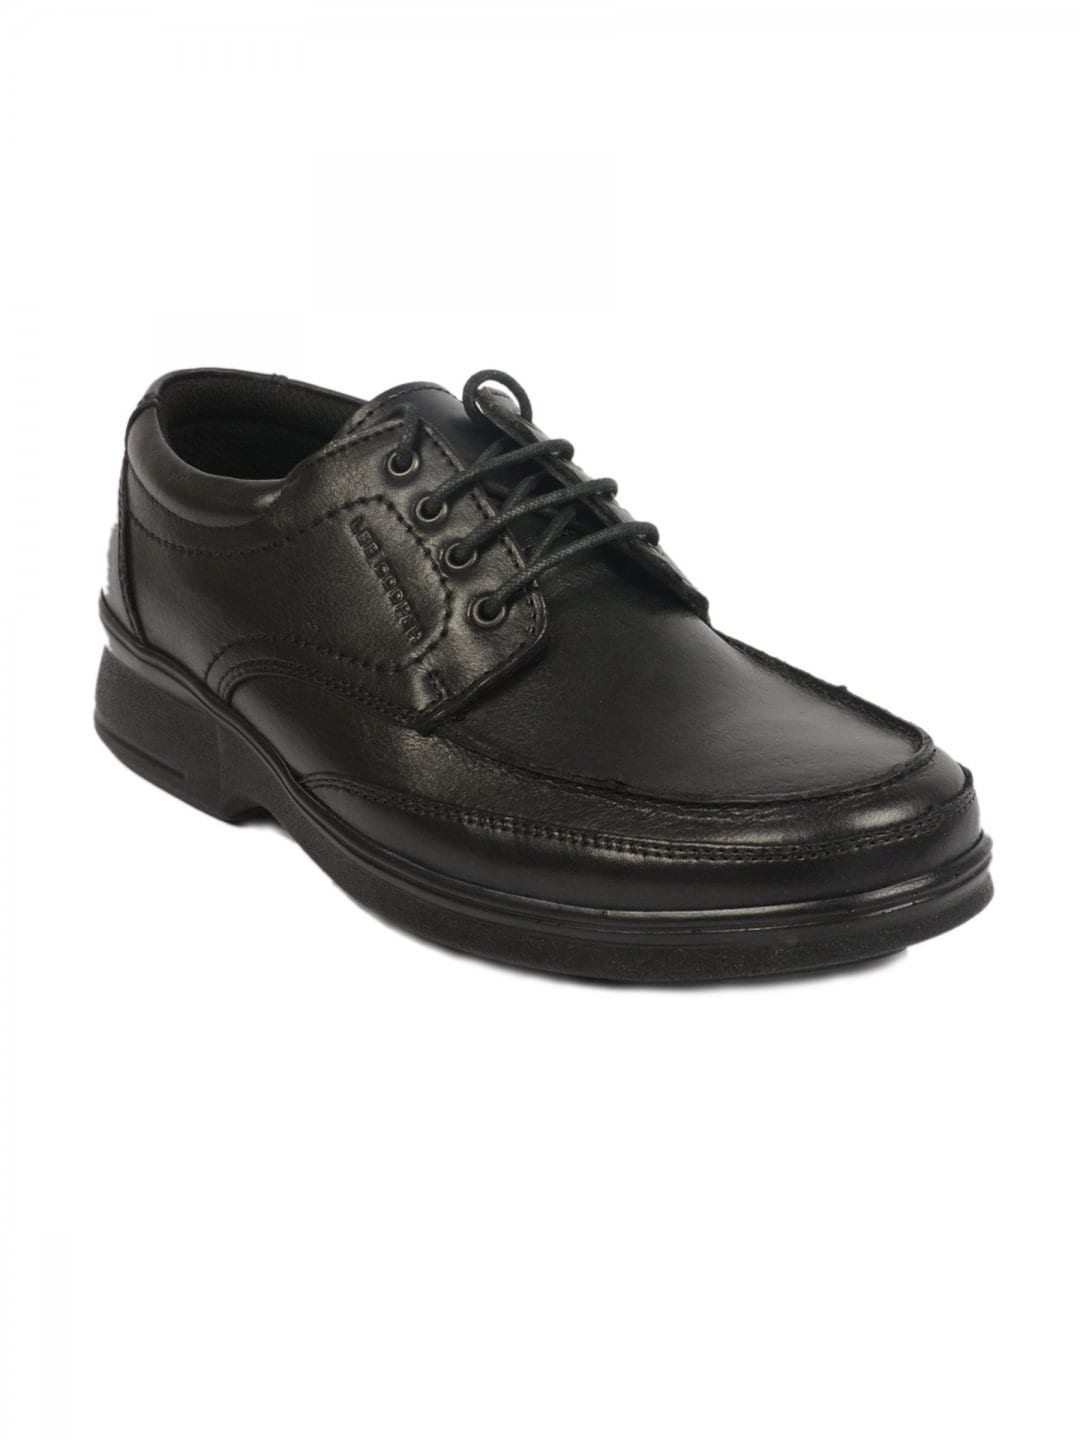 Lee Cooper Men Nnado Black Formal Shoes